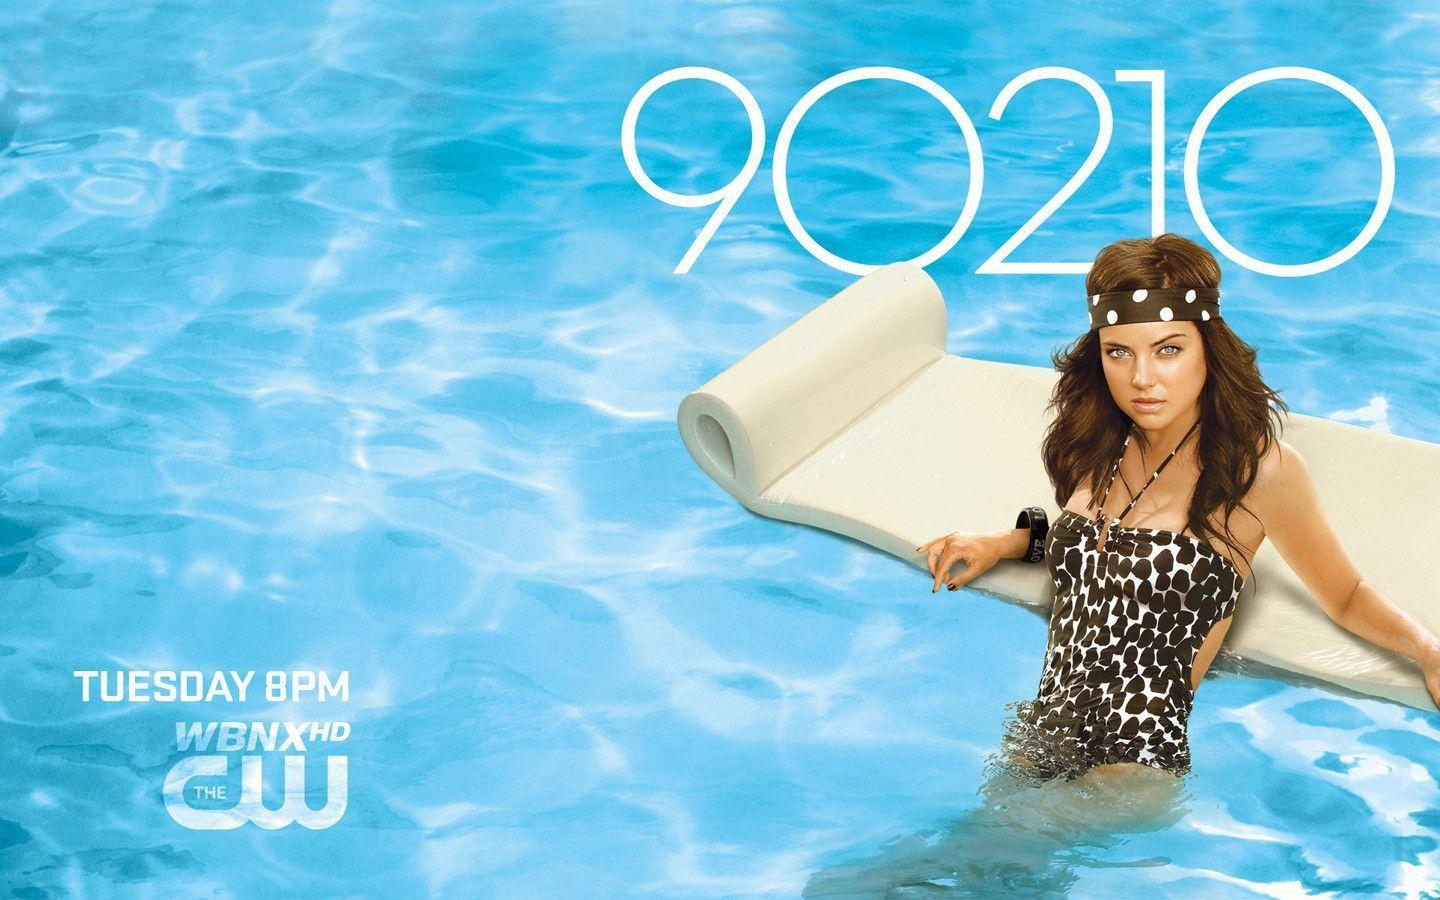 Fonds d&;écran 90210, tous les wallpaper 90210